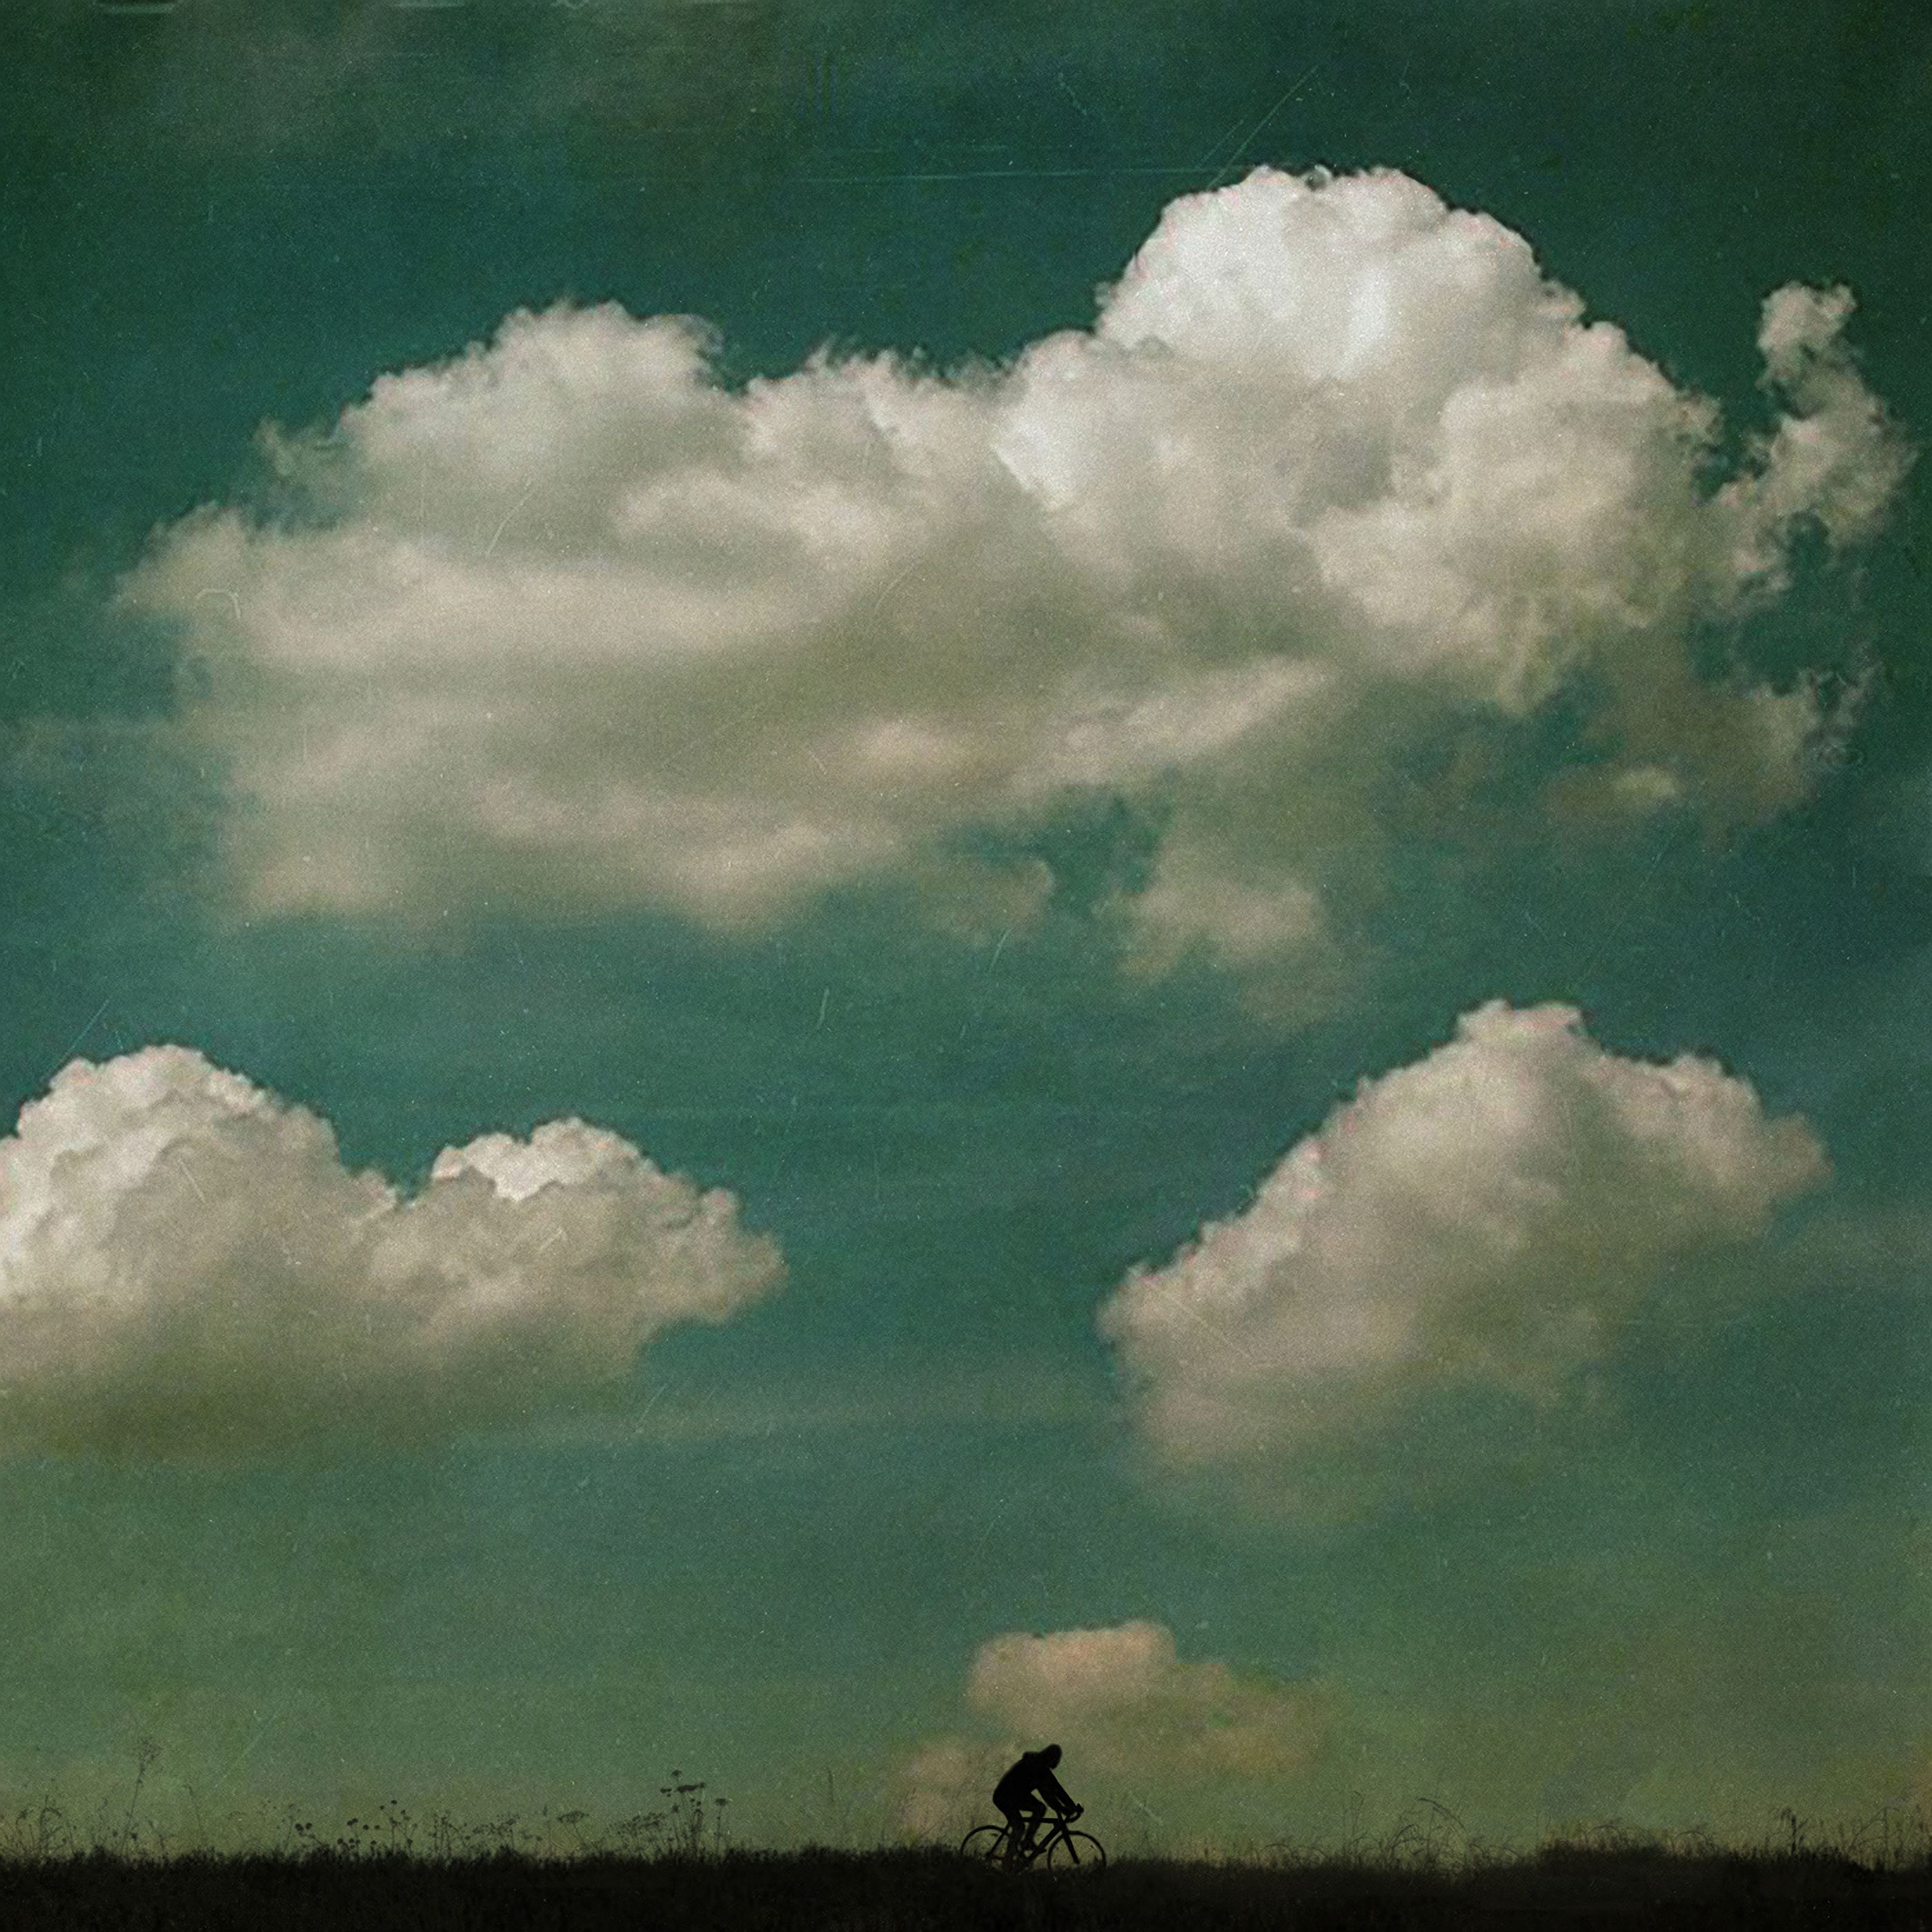 art, sky, clouds, silhouette, cyclist